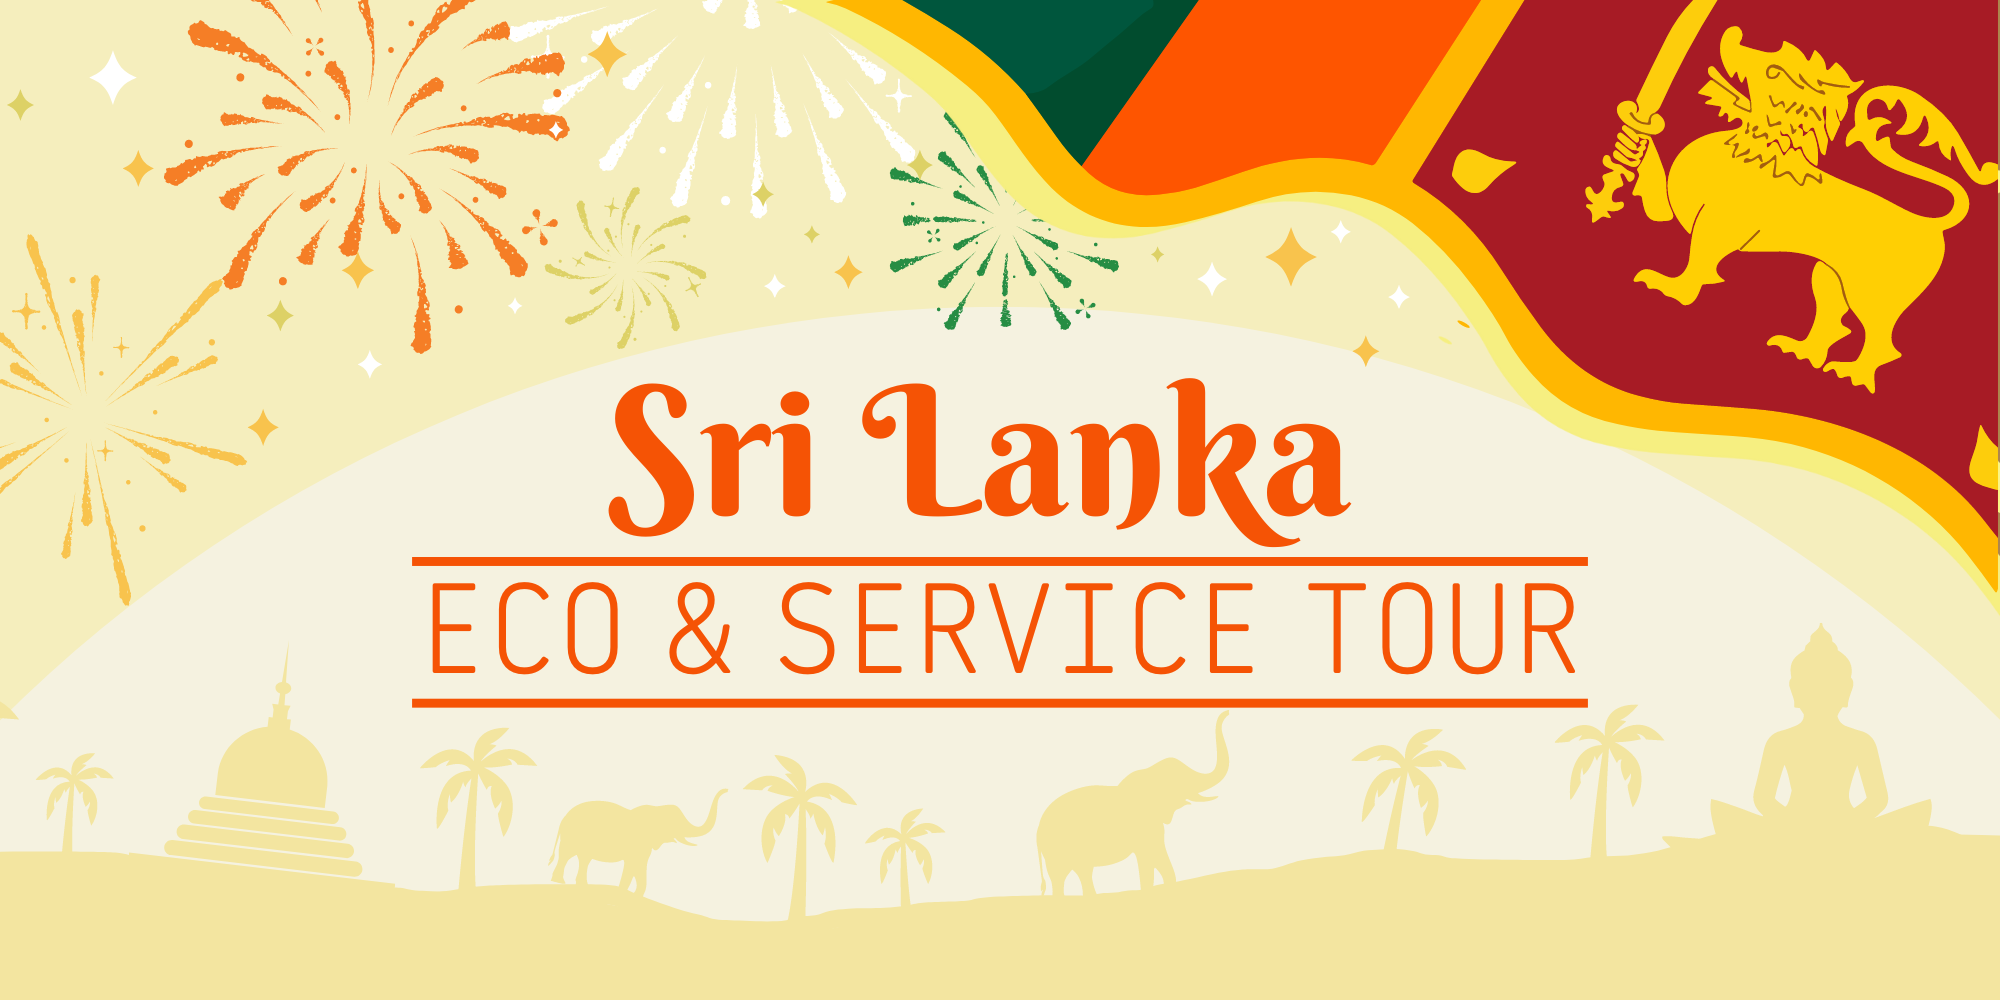 Sri Lanka Eco & Service Tour